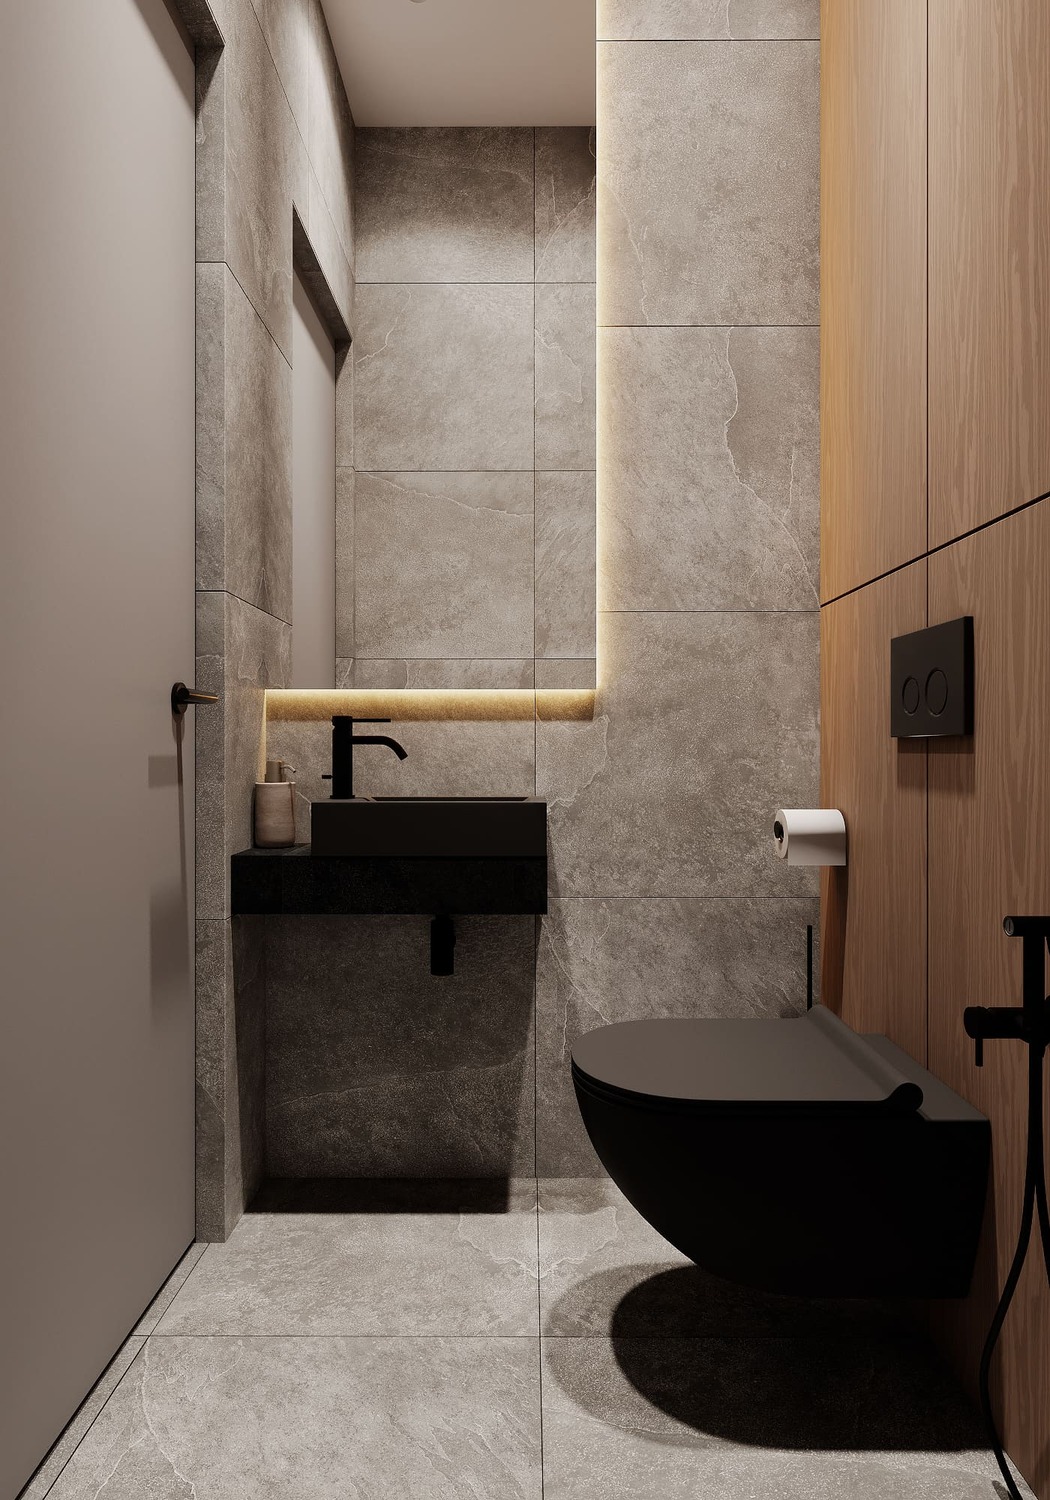 Ergonomic apartment in a minimalist style, bathroom, photo 9